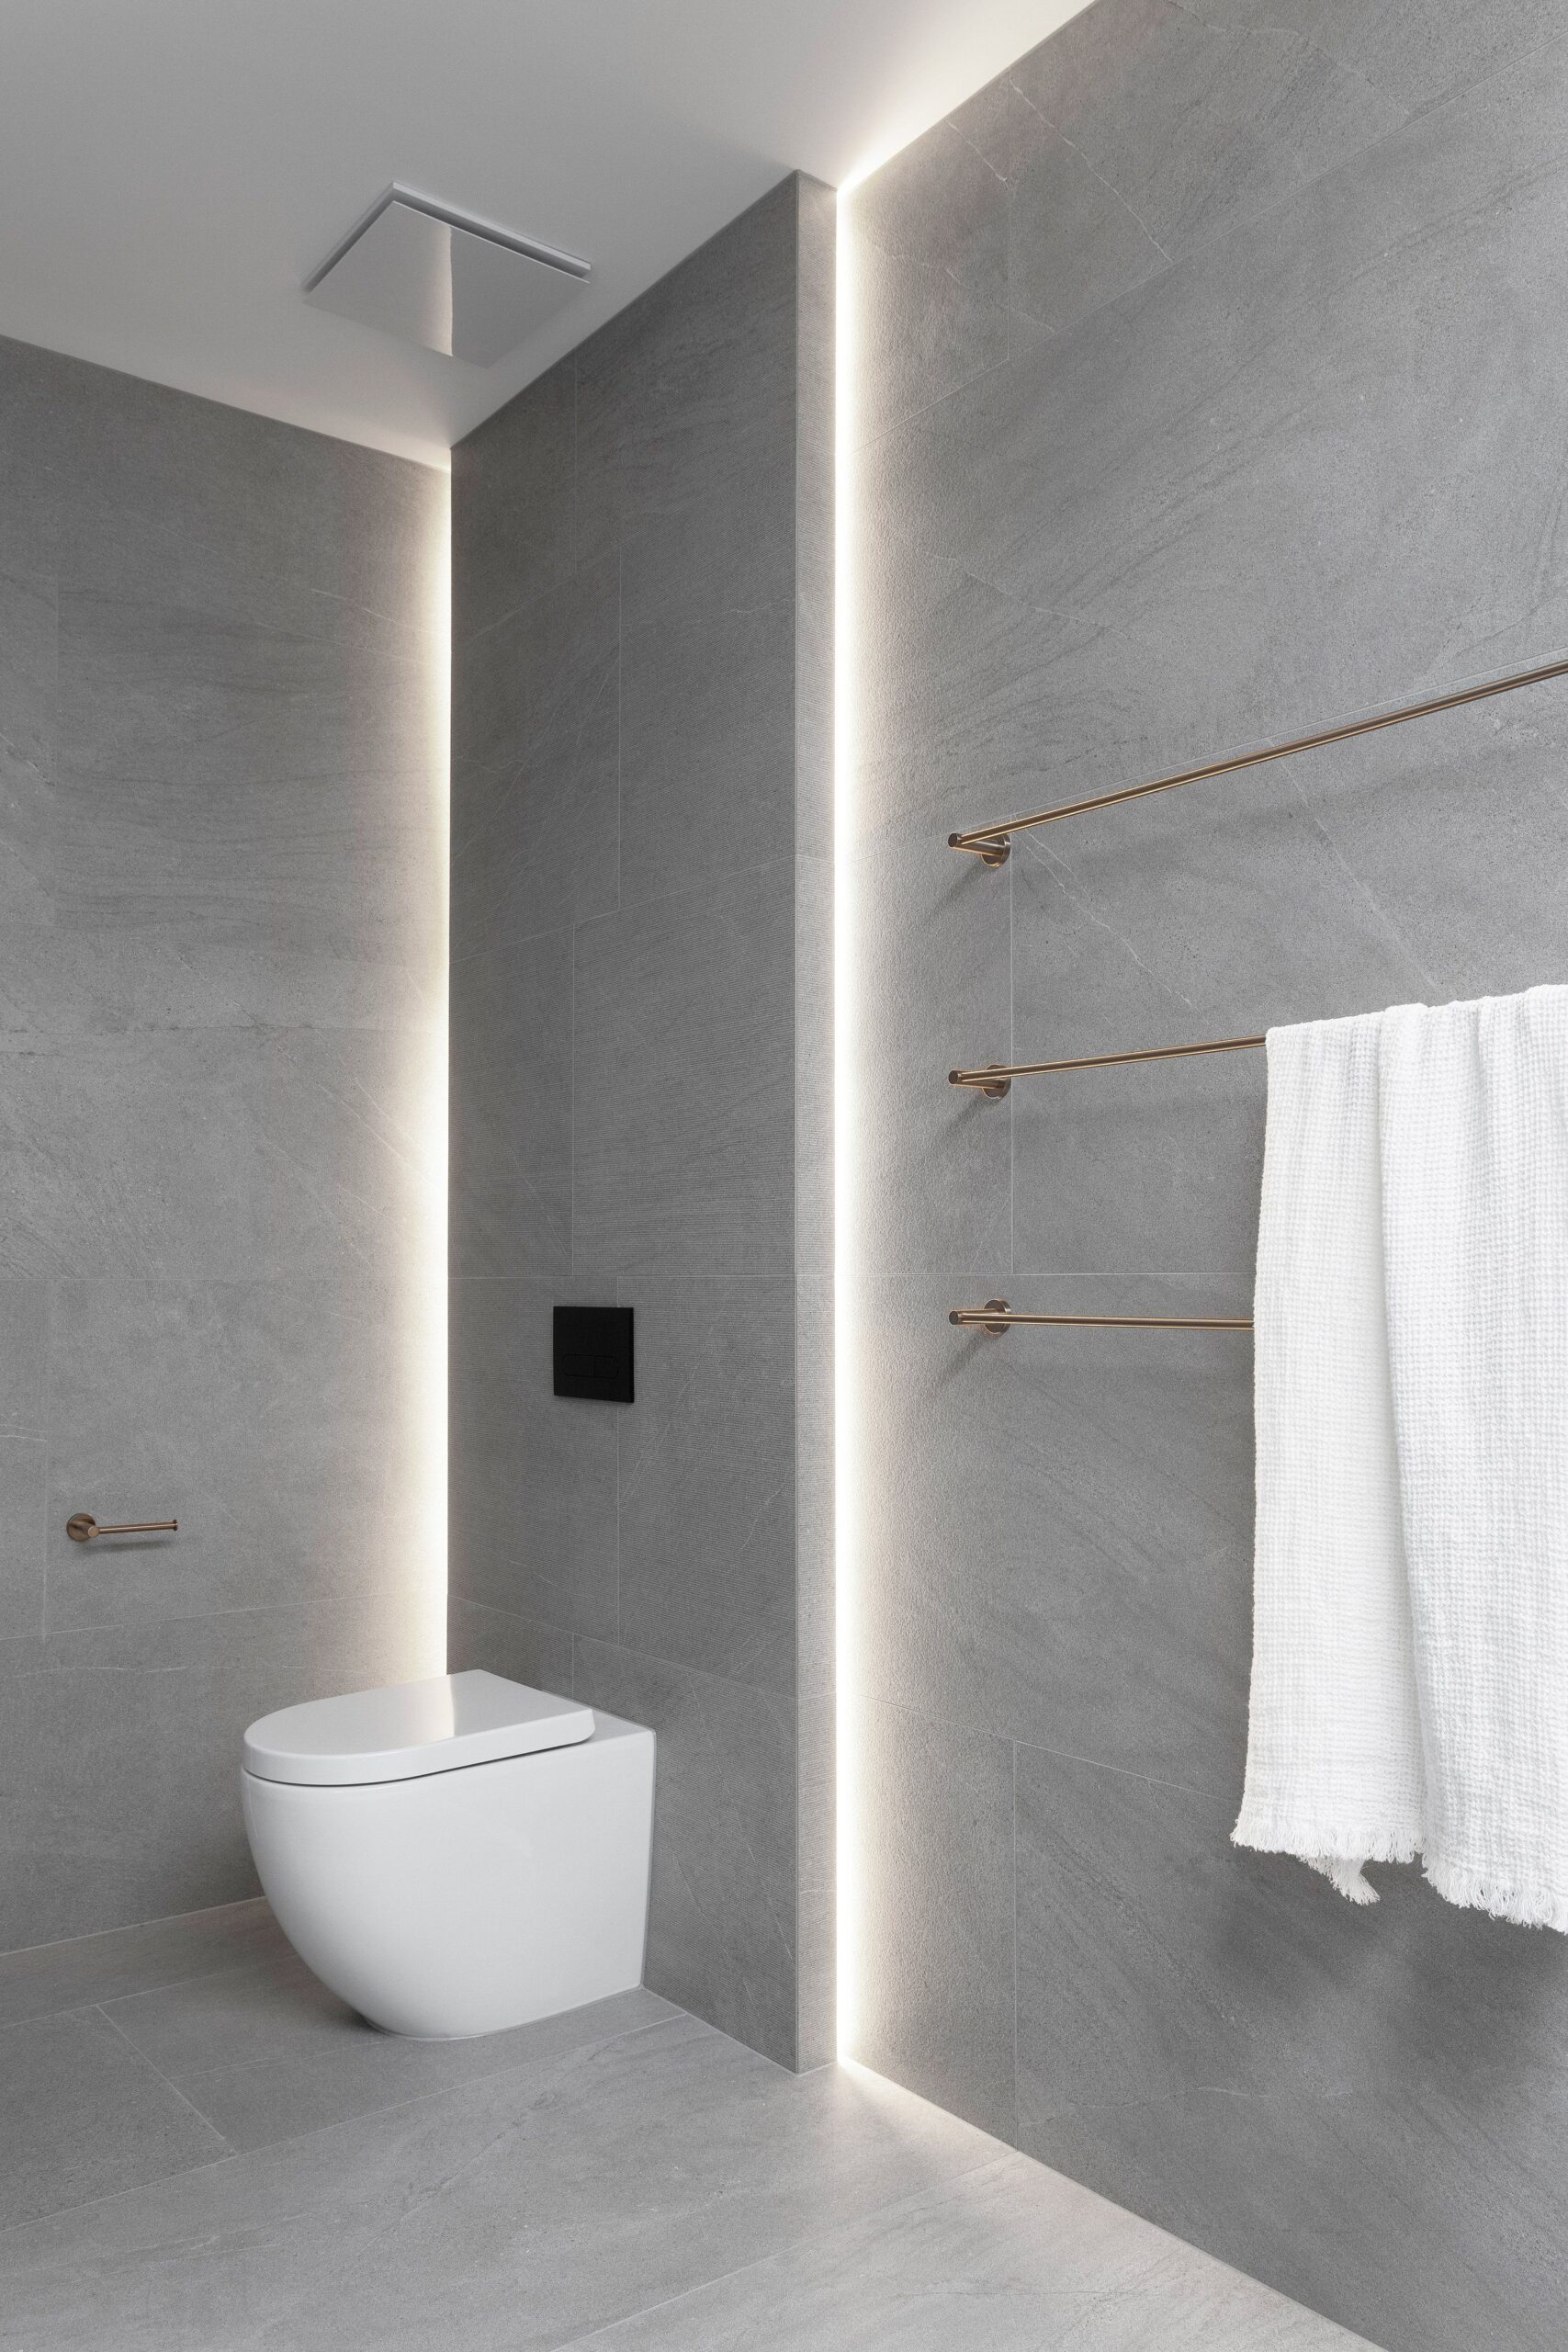 Led Bathroom Lights Waterproof Types